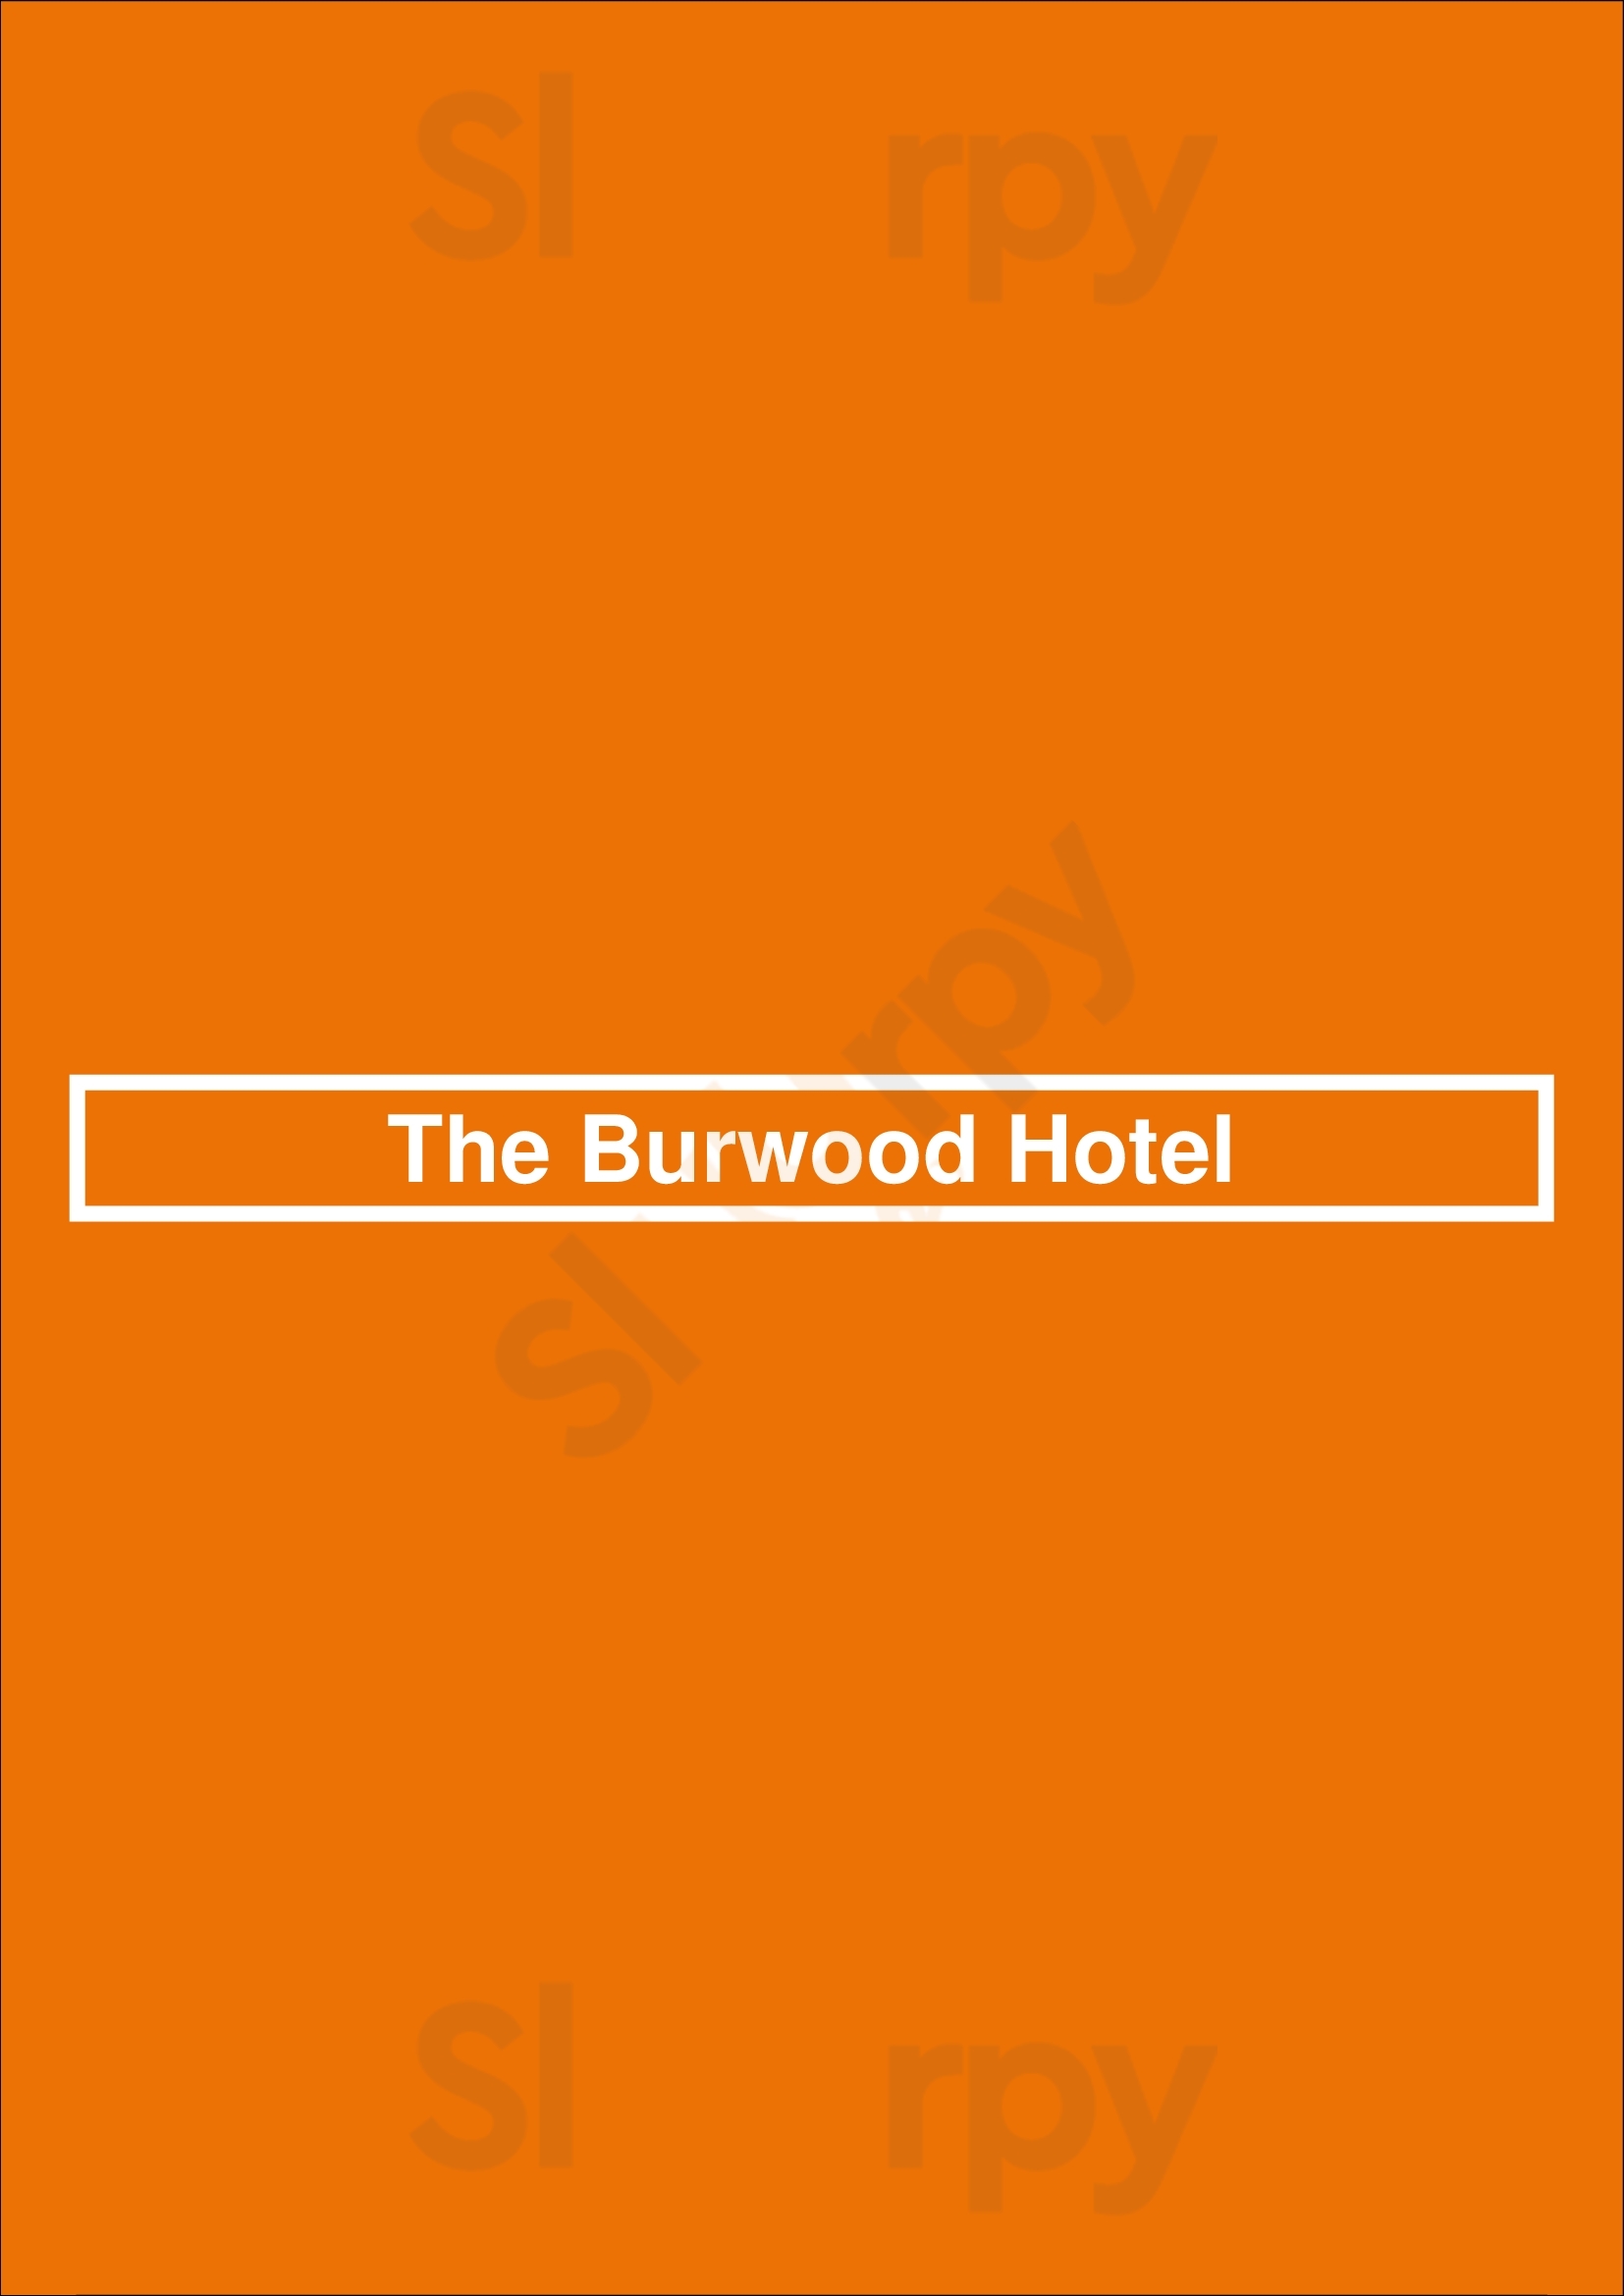 The Burwood Hotel Burwood Menu - 1